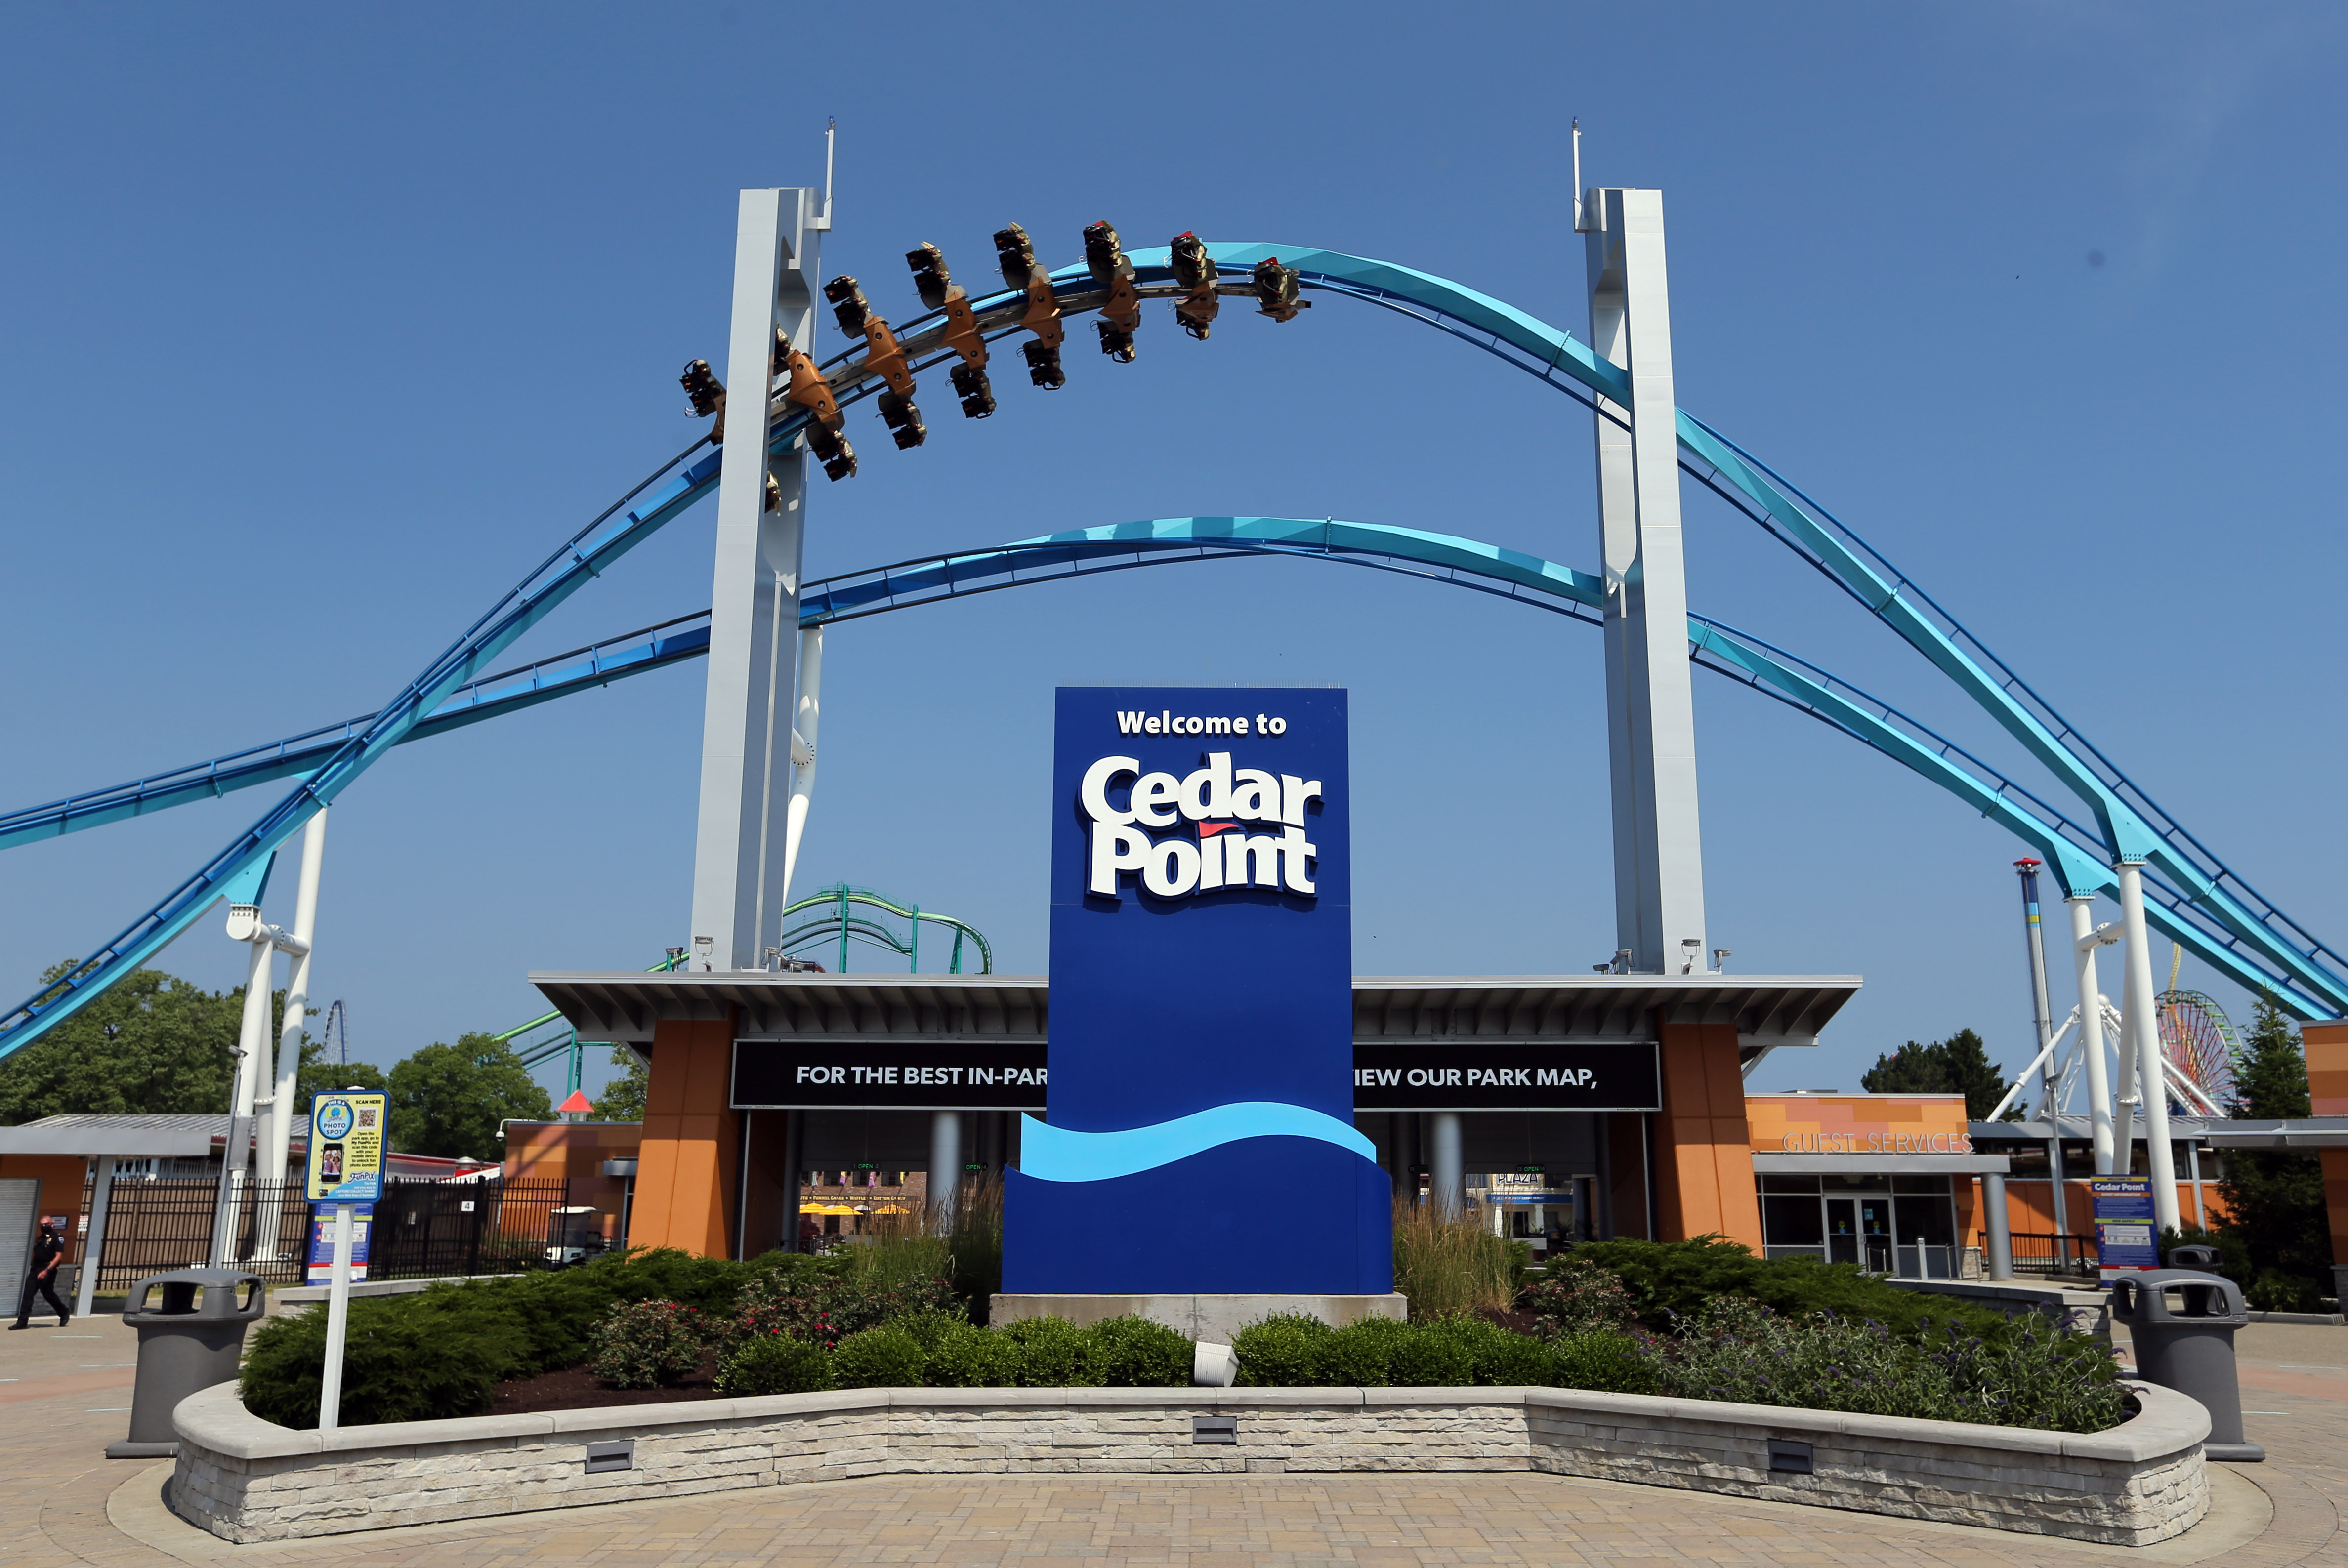 Six Flags and Cedar Fair, which owns Knott's Berry Farm, merging